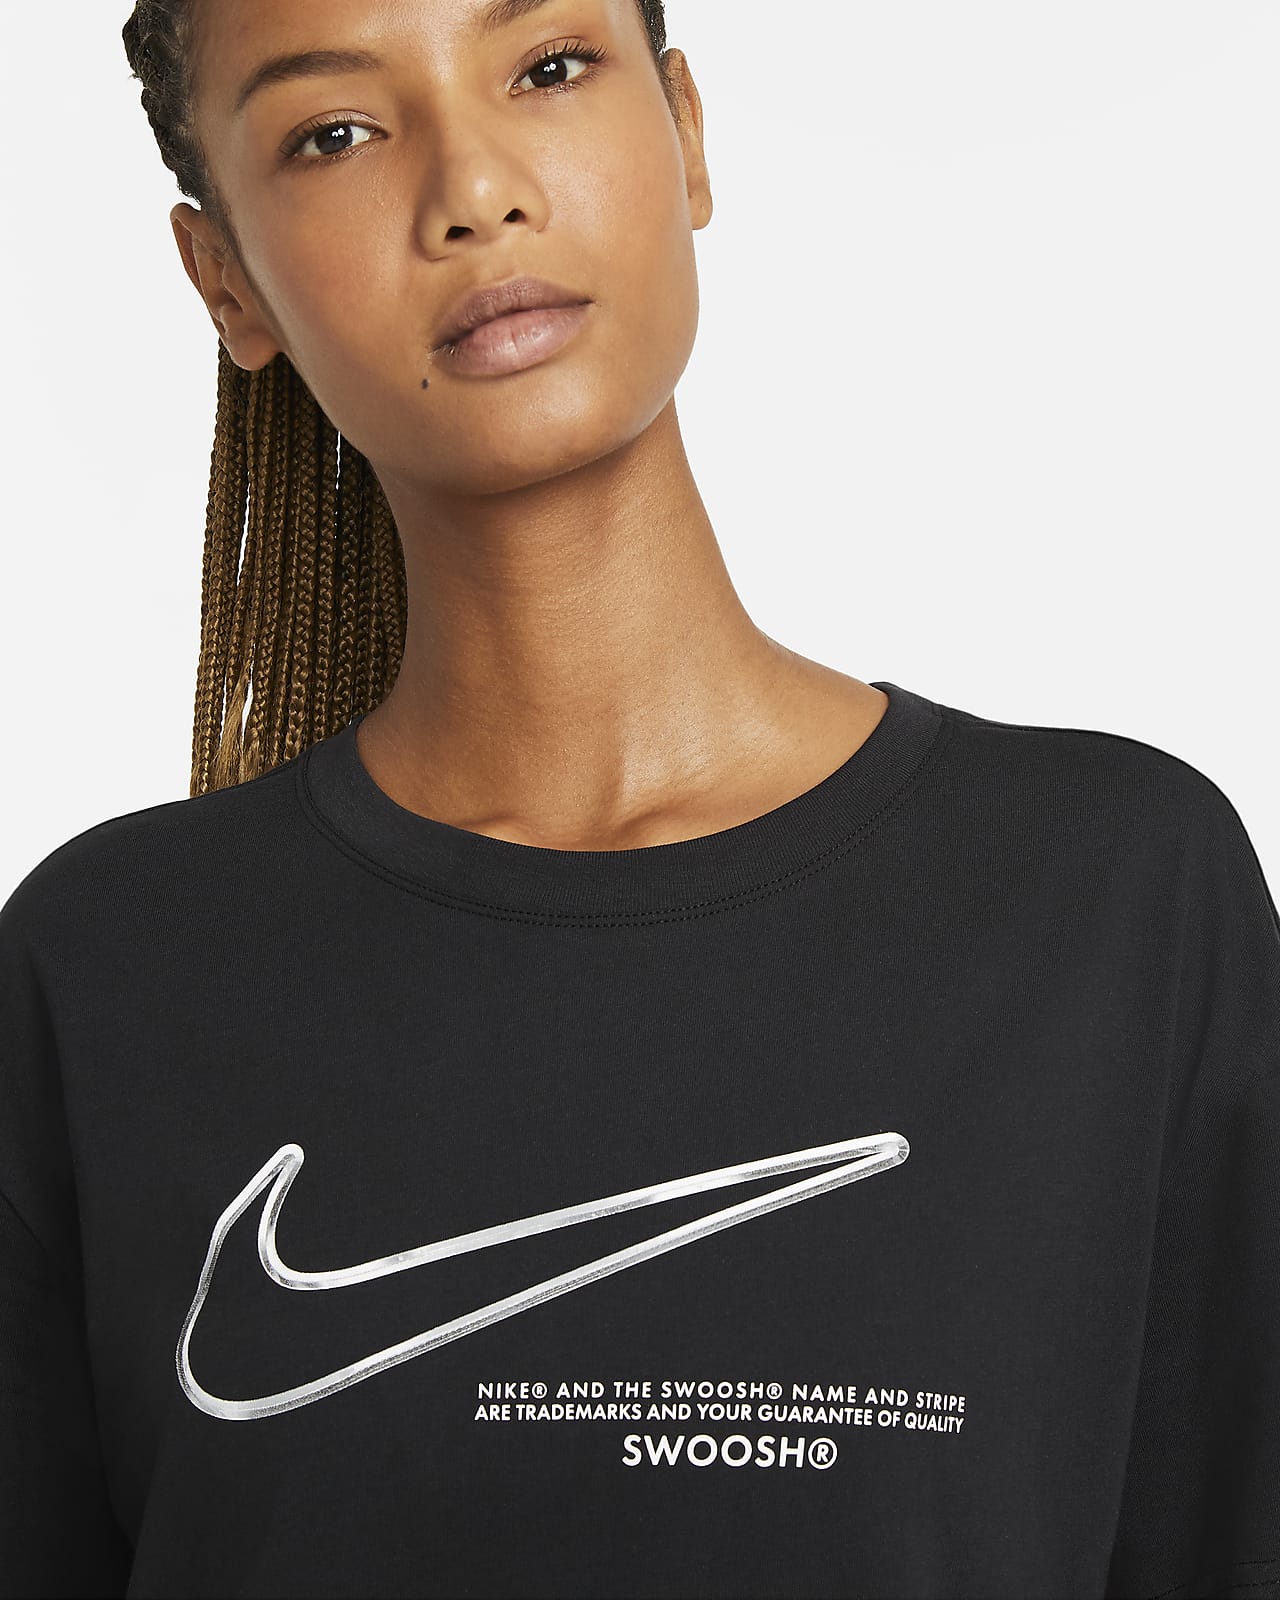 T Shirt Nike Swoosh Shop Deals, Save 41% | jlcatj.gob.mx